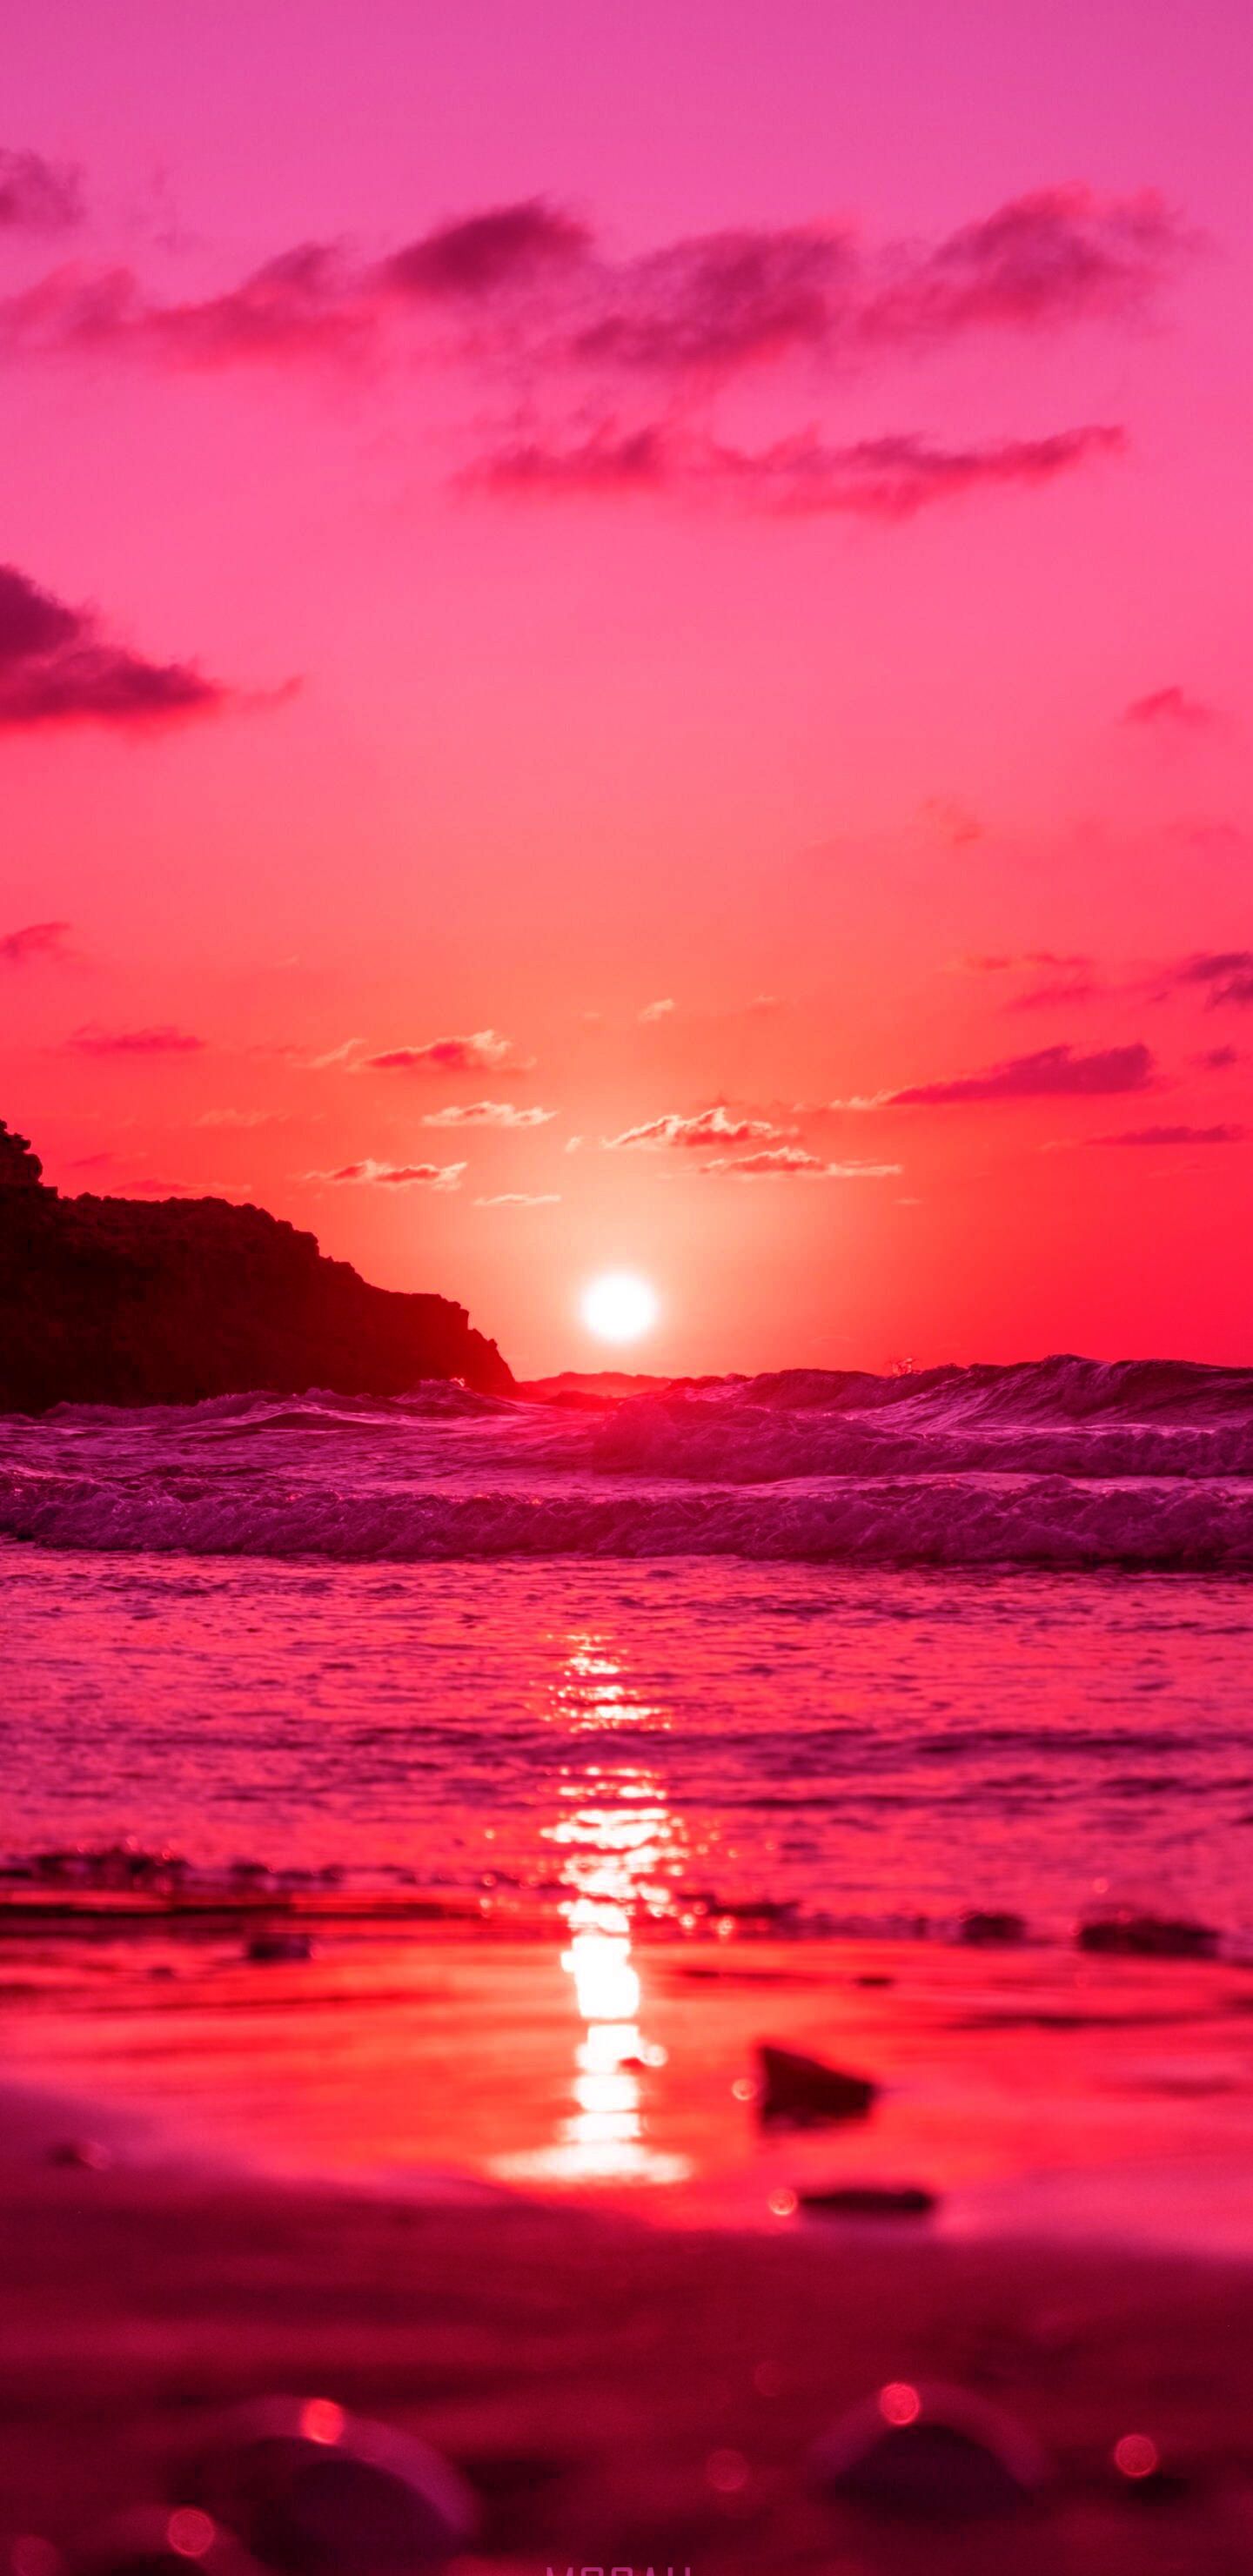 Red sunset over the ocean wallpaper 1242x2688 - Sunset